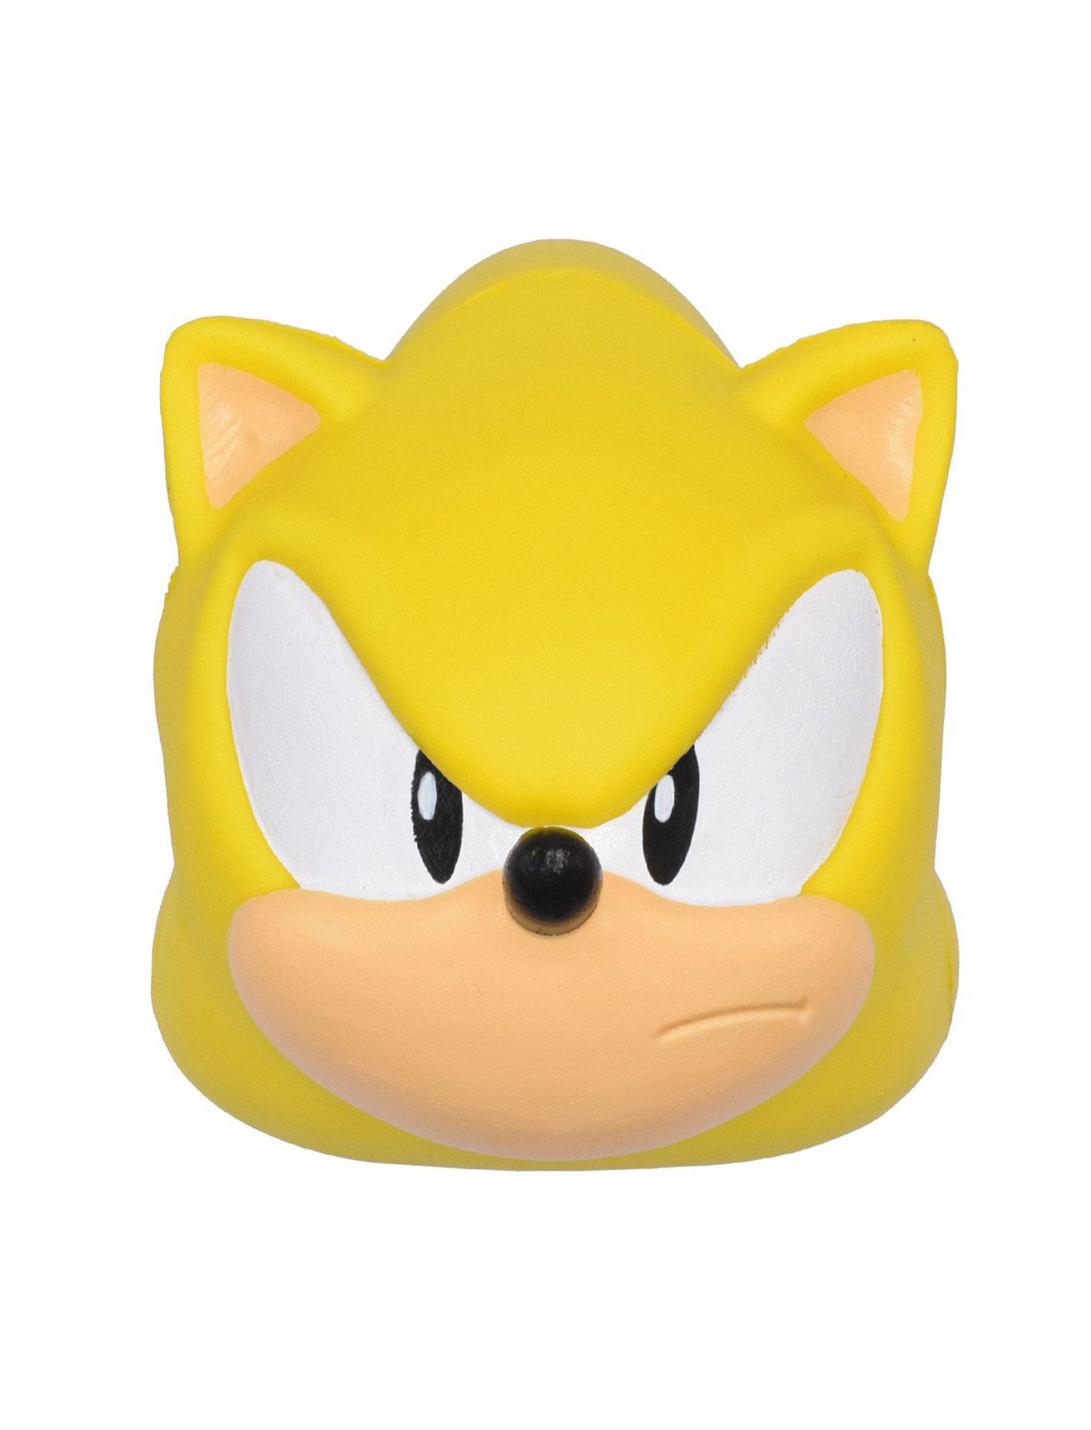 Sonic The Hedgehog SquishMe Super Sonic Figure | Hot Topic